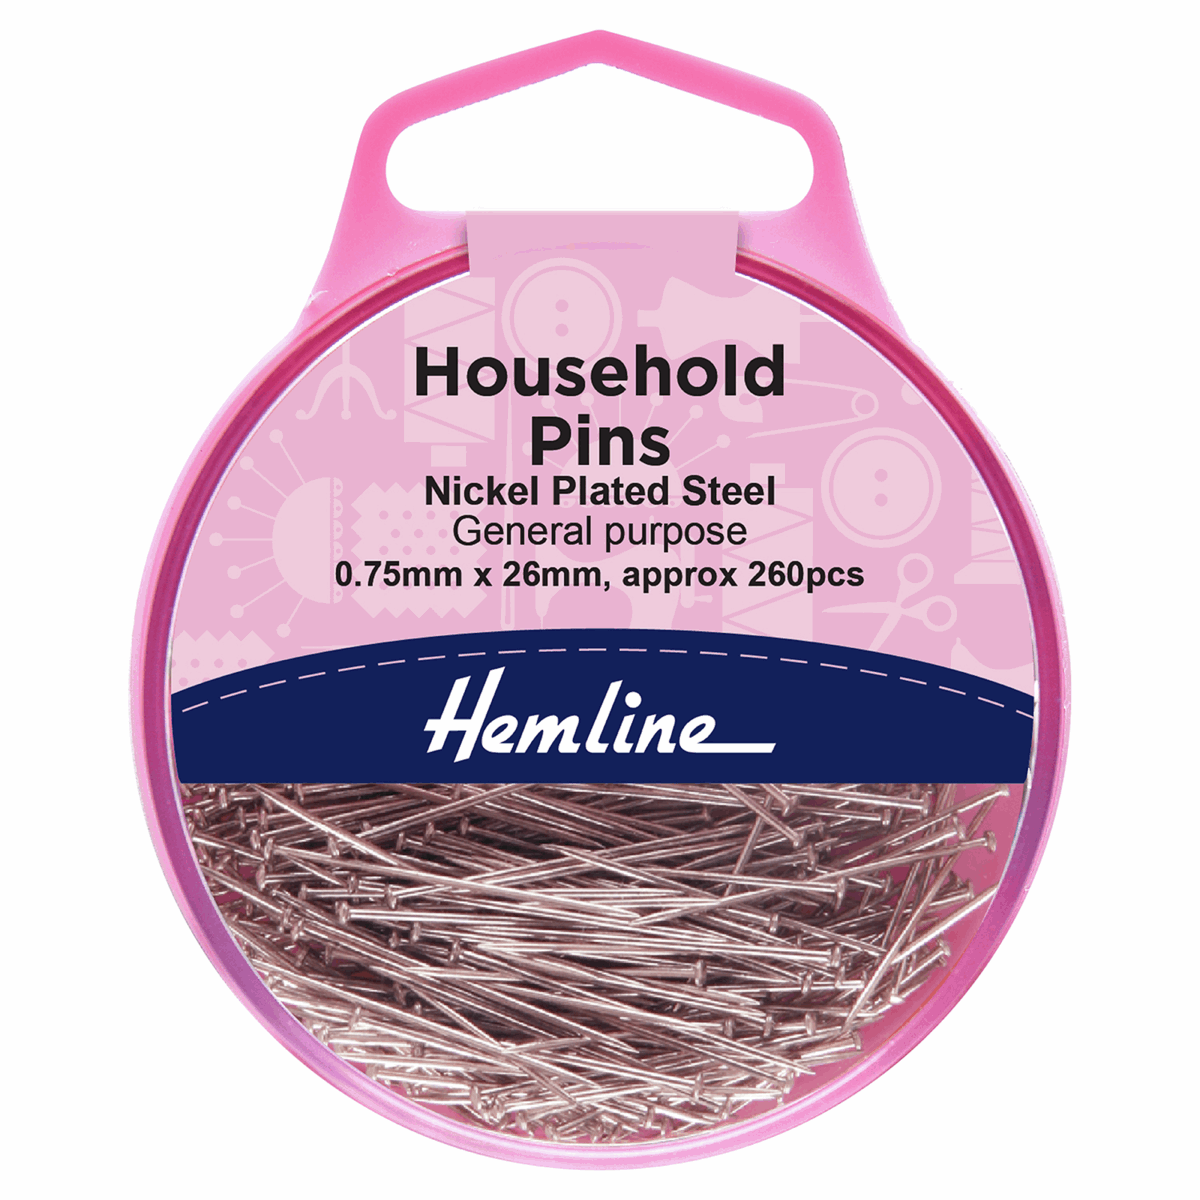 Hemline Household Pins